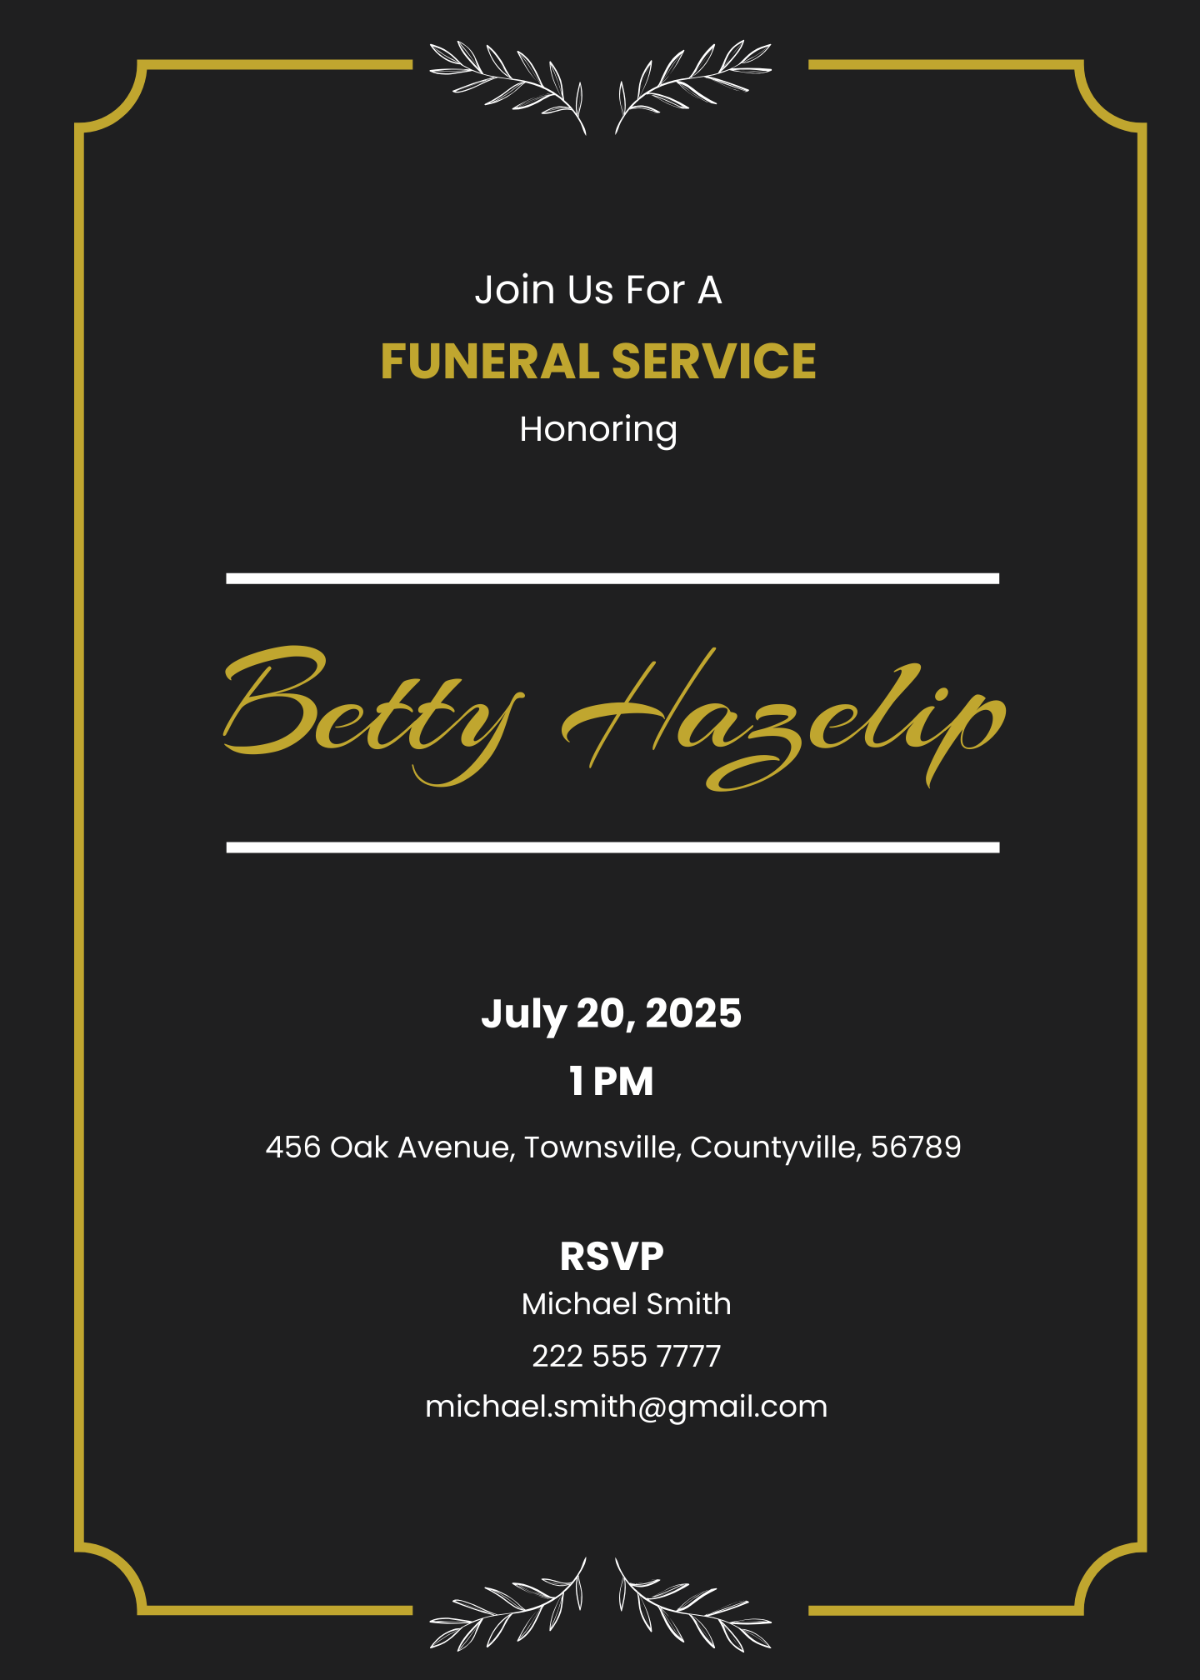 Email Funeral Memorial Invitation